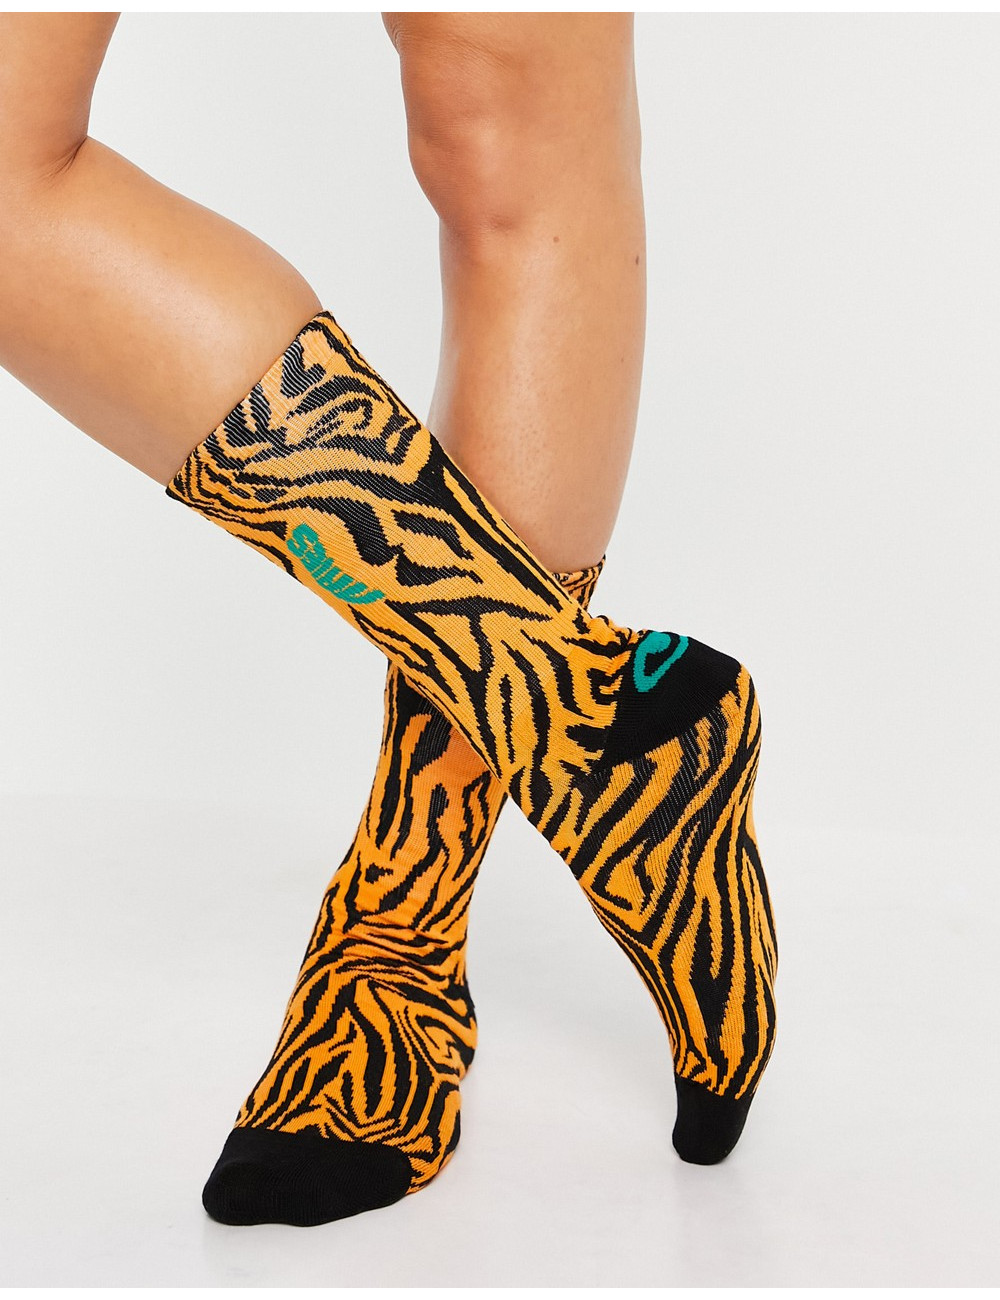 Aries socks in tiger print